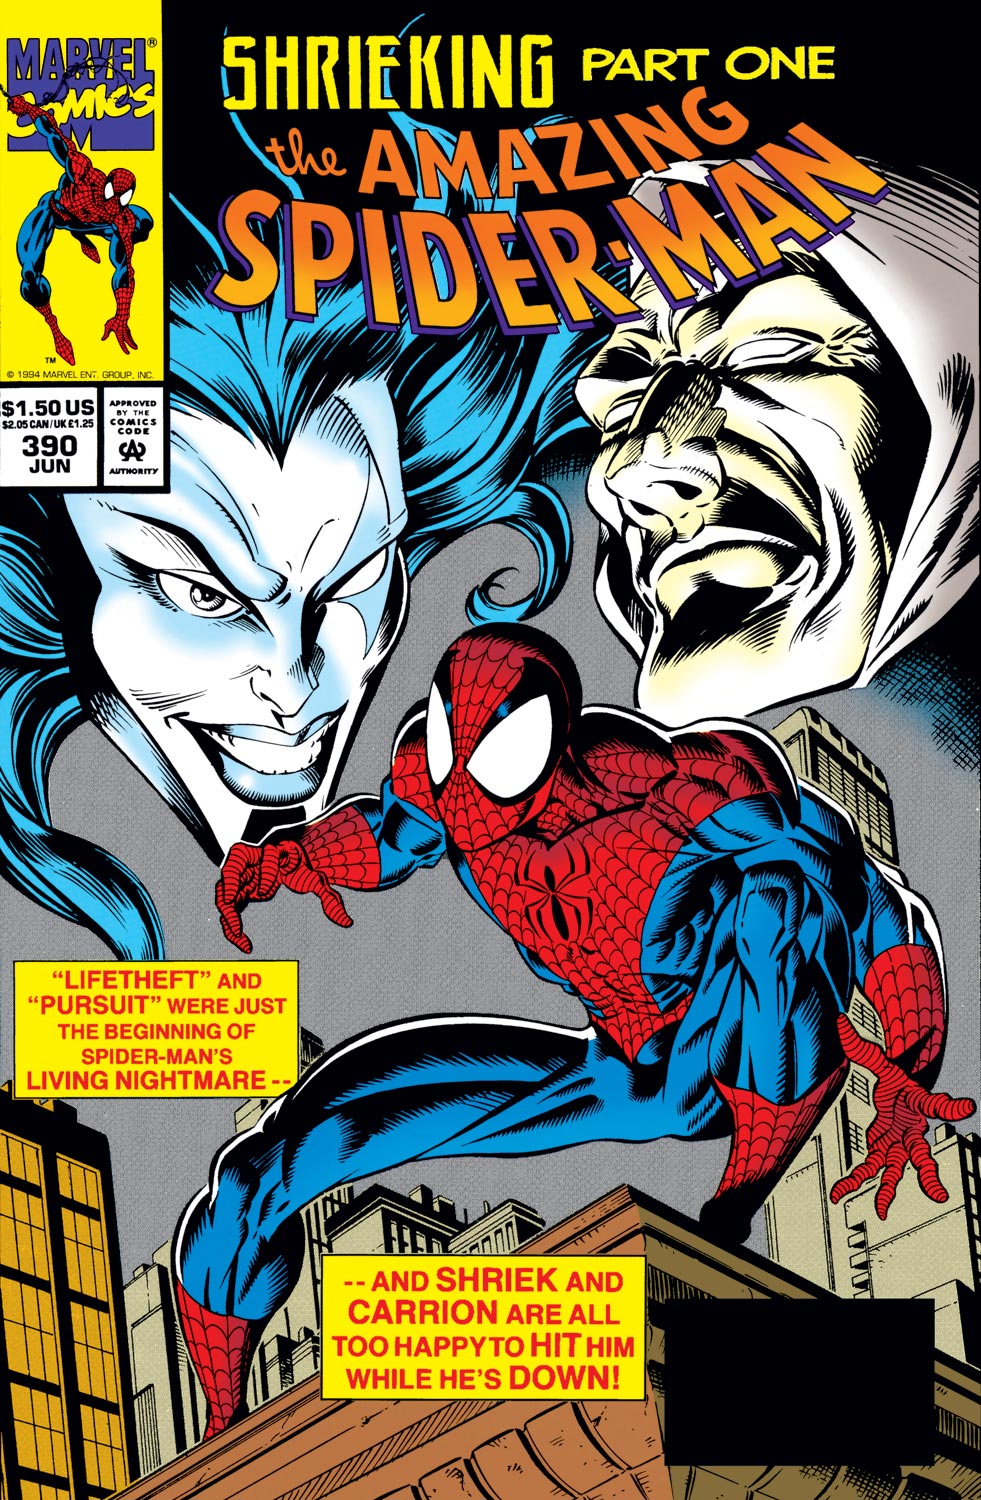 Amazing Spider-Man #390 (F/VF)